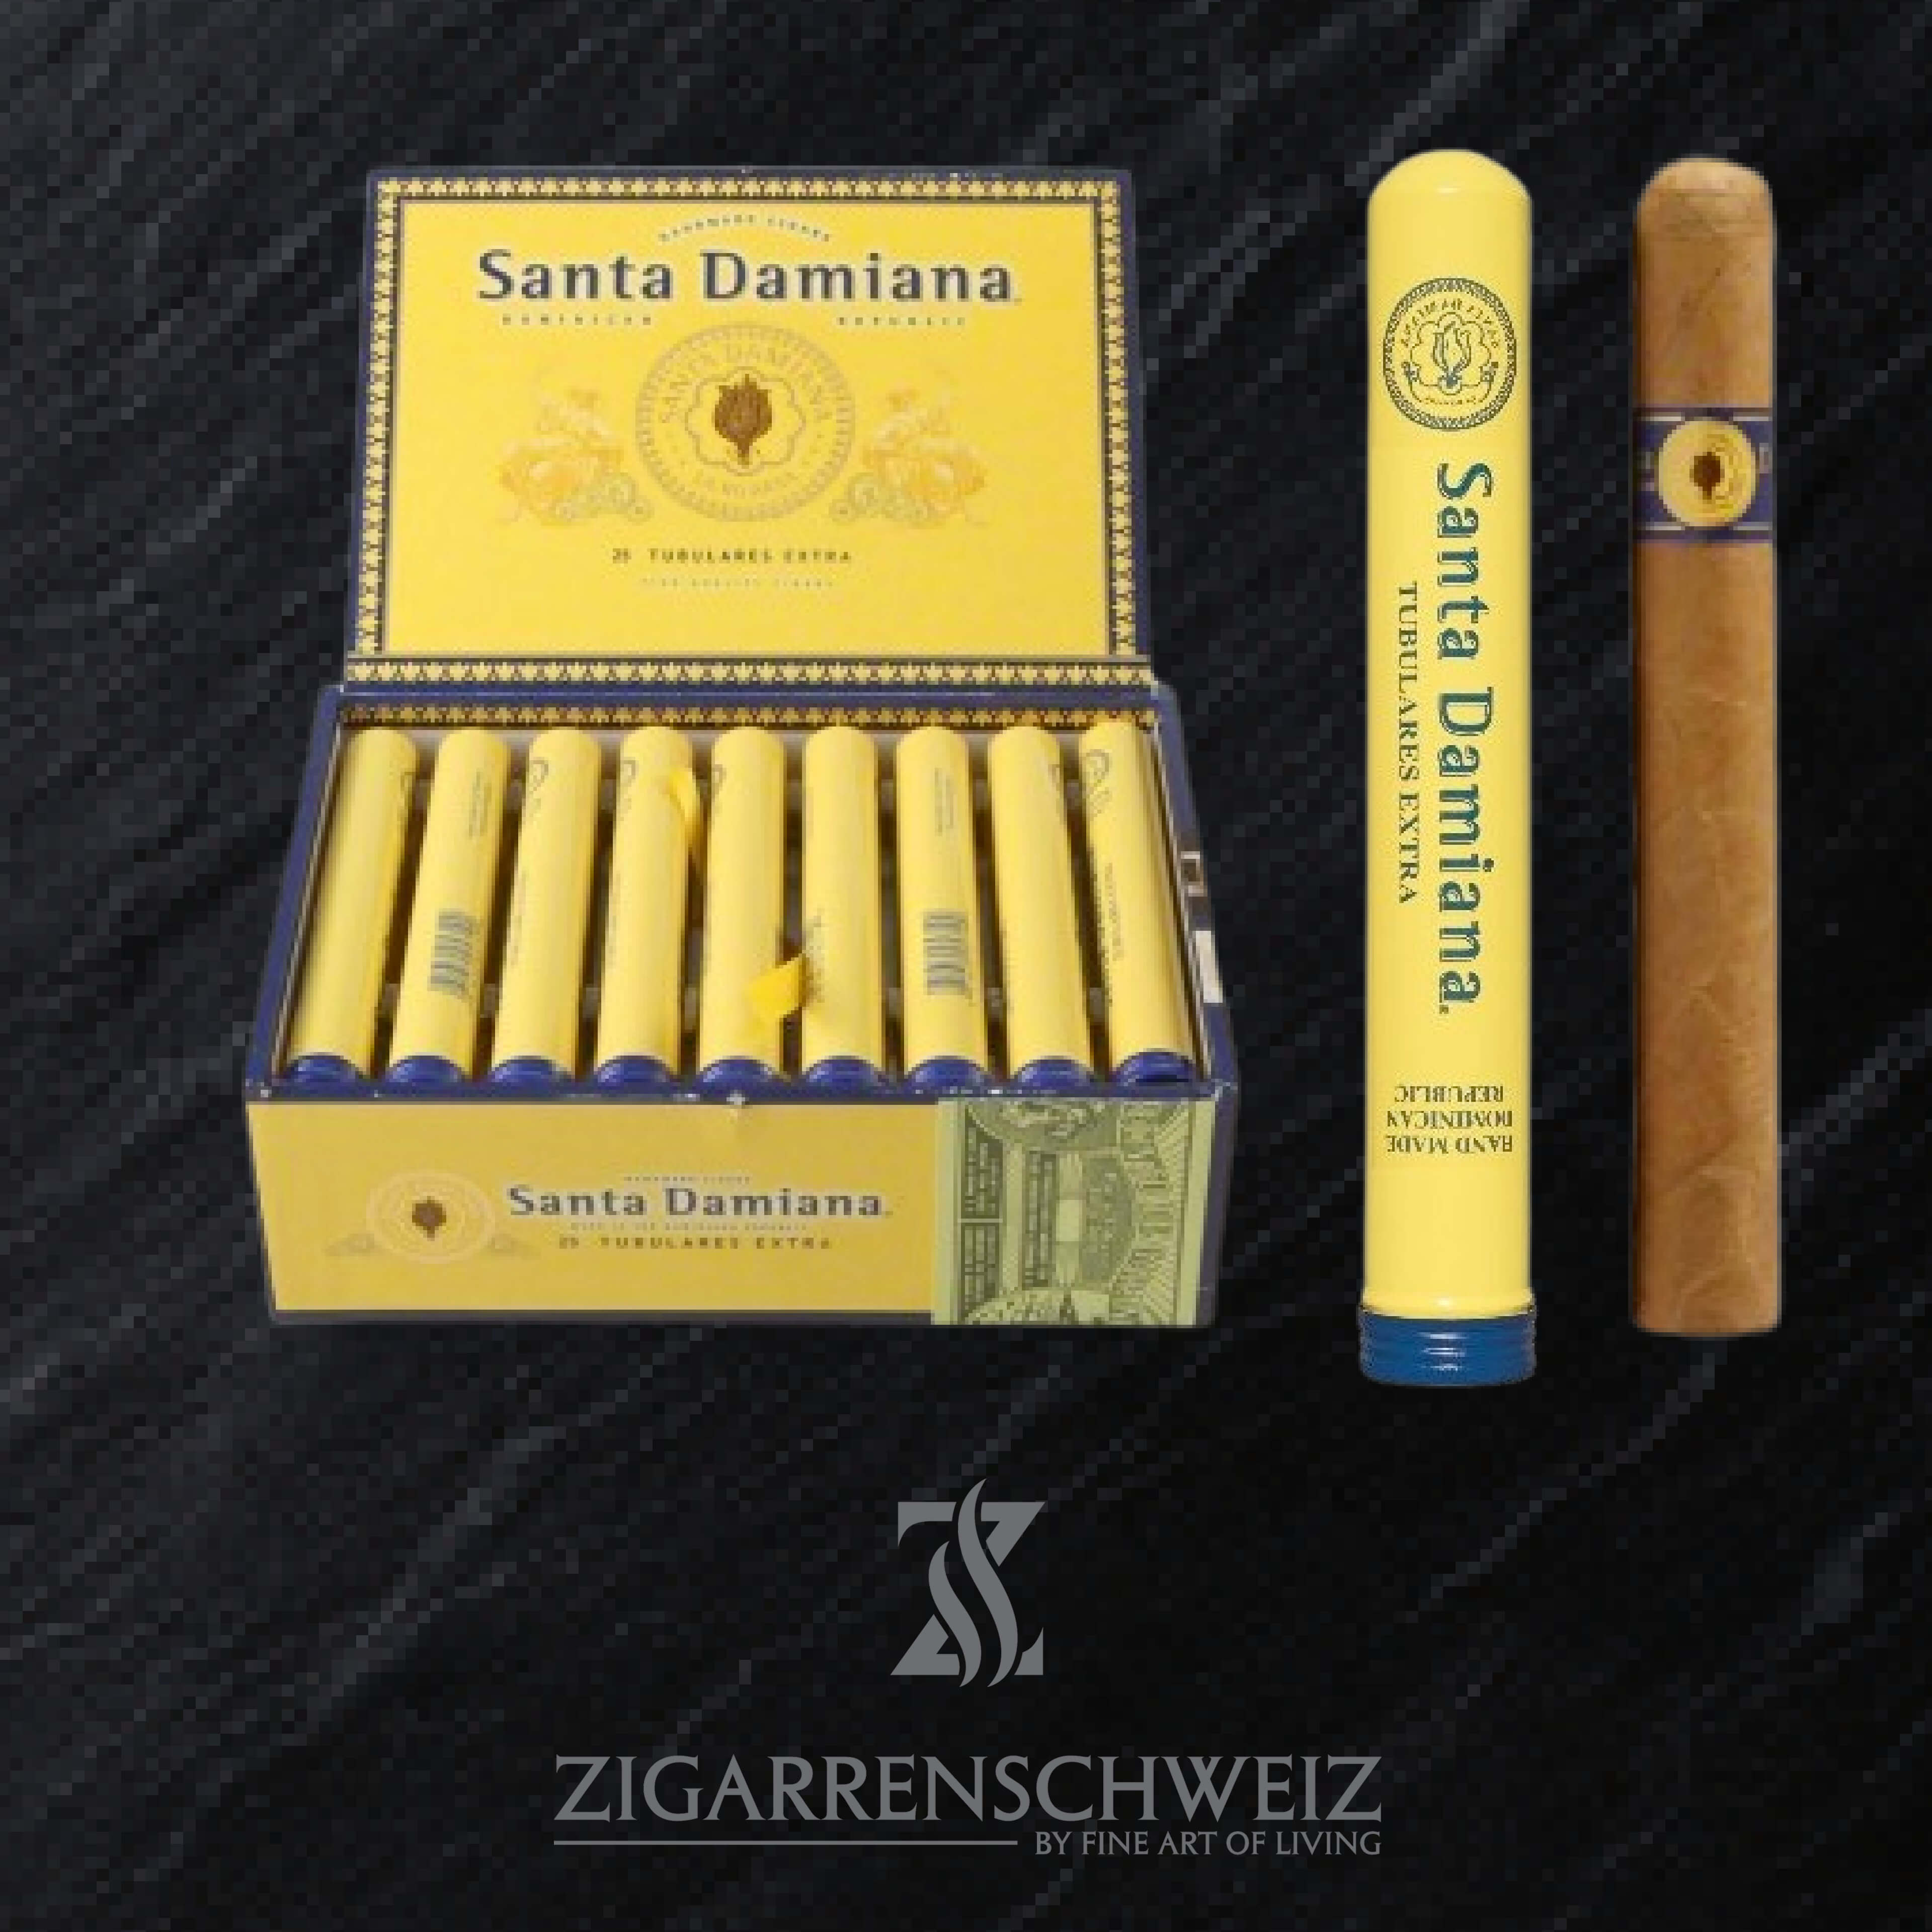 Santa Damiana Classic Tubulares Extra Zigarren Kiste offen